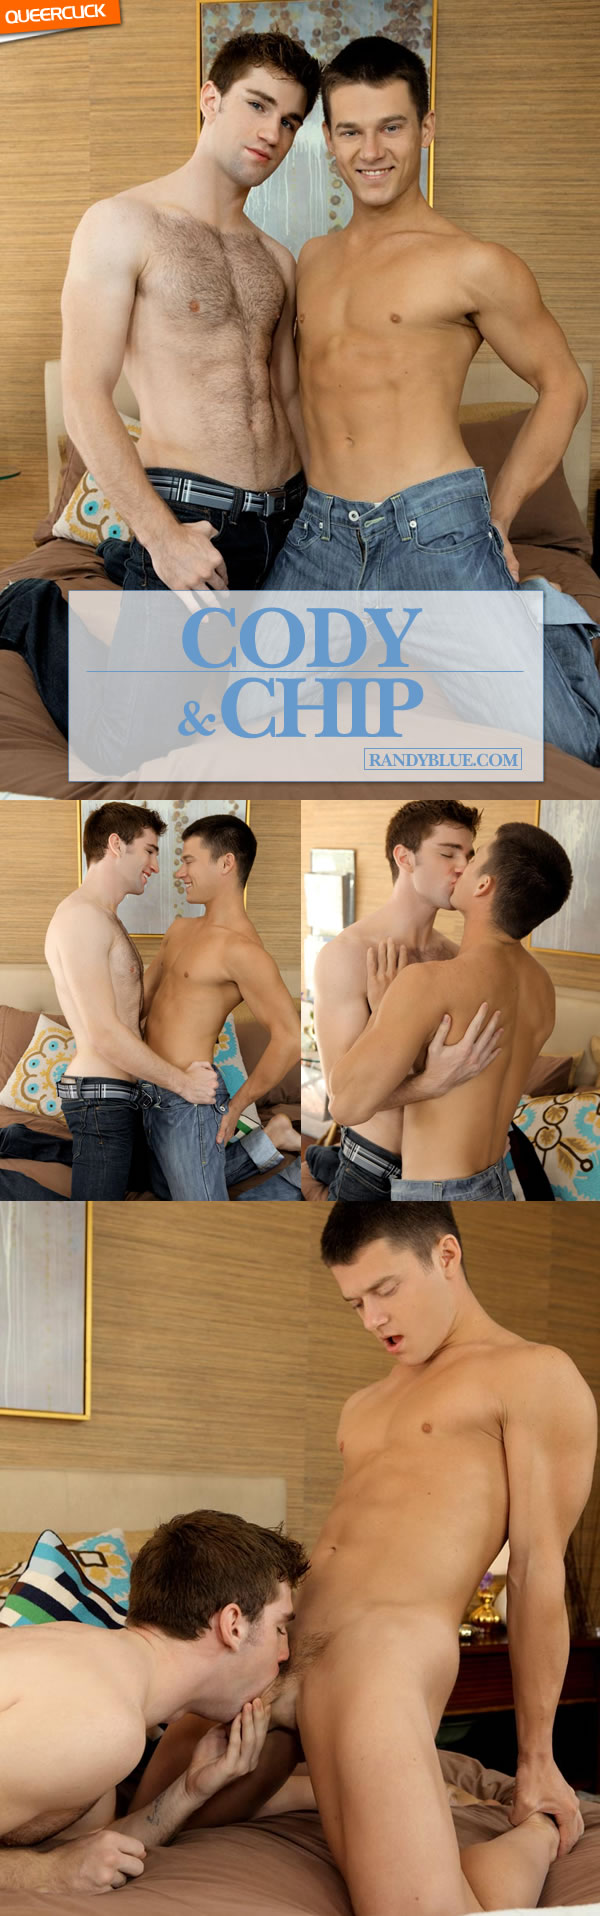 Randy Blue: Chip & Cody